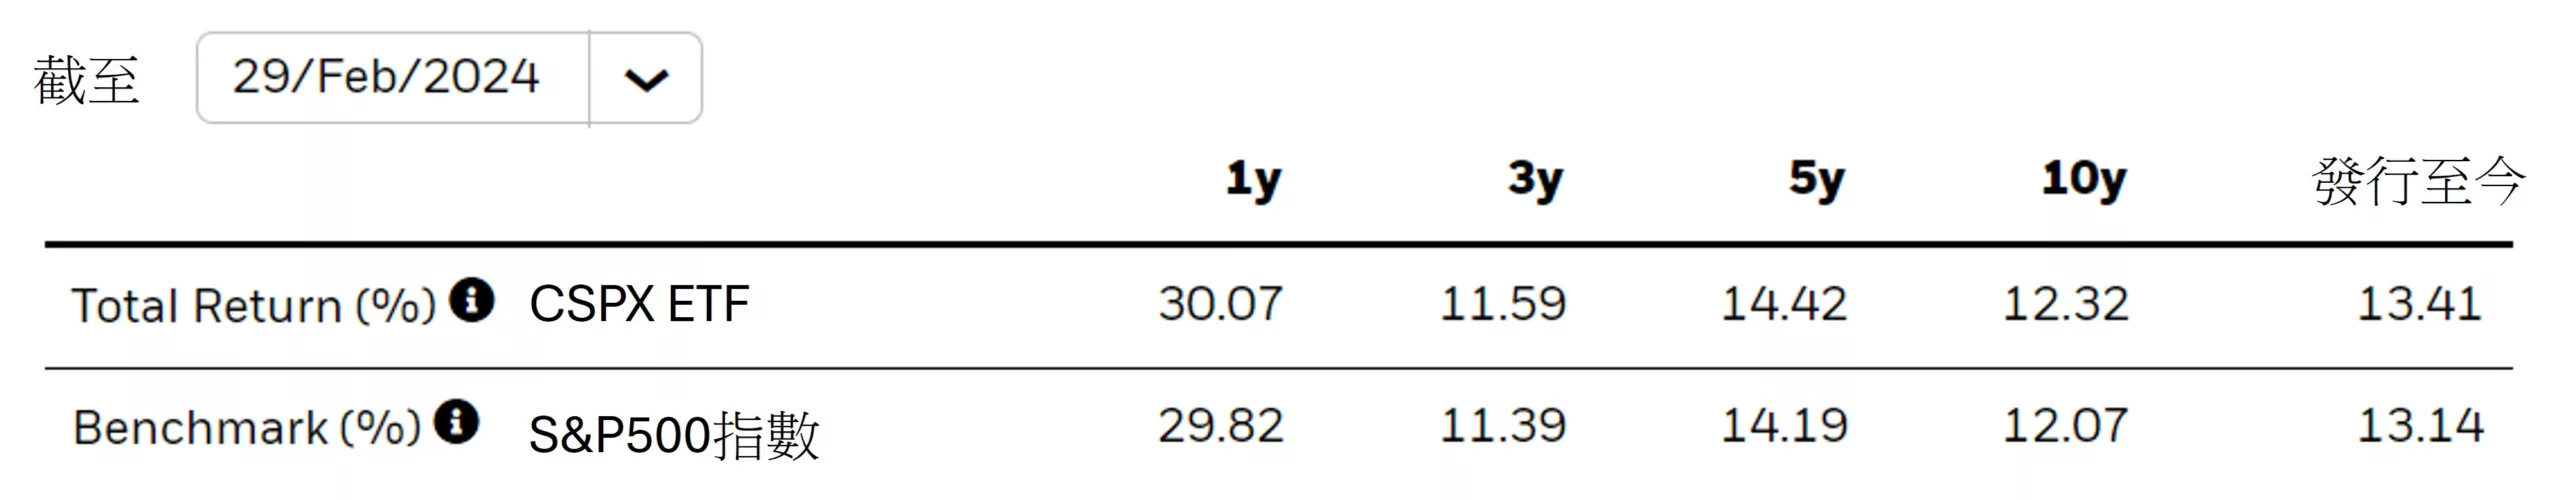 CSPX年化報酬率 (圖片來源: 官方網站)